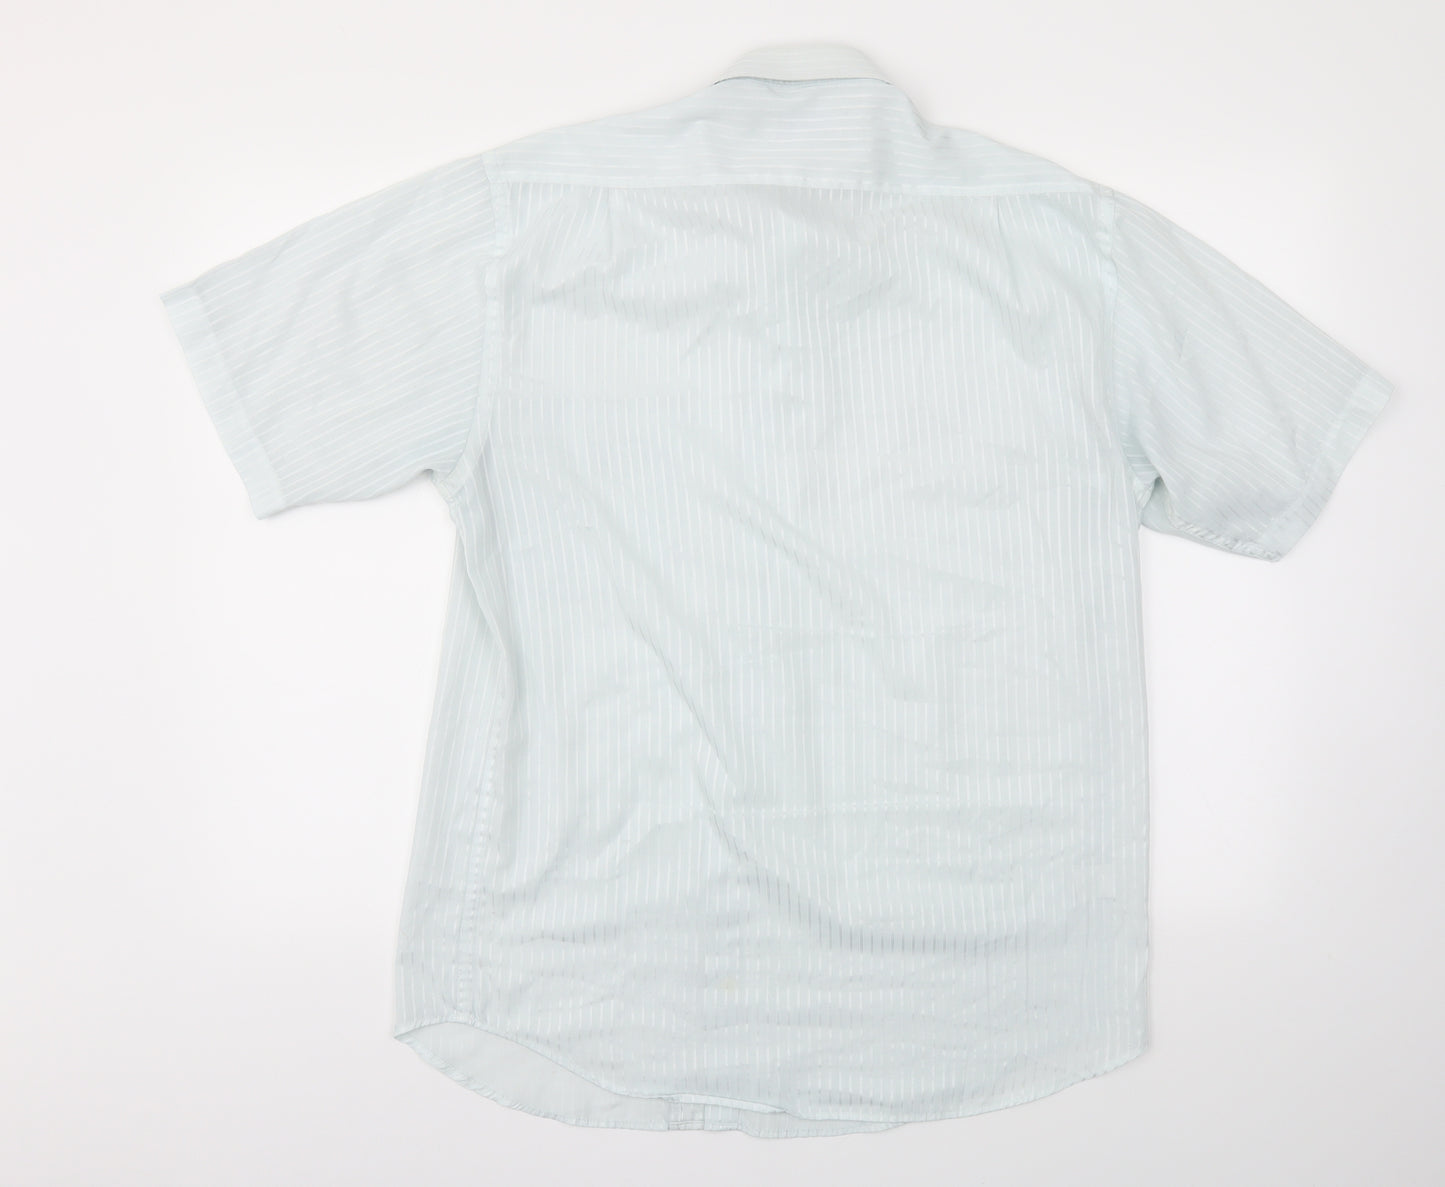 Essentials Mens Blue Striped   Dress Shirt Size 15.5